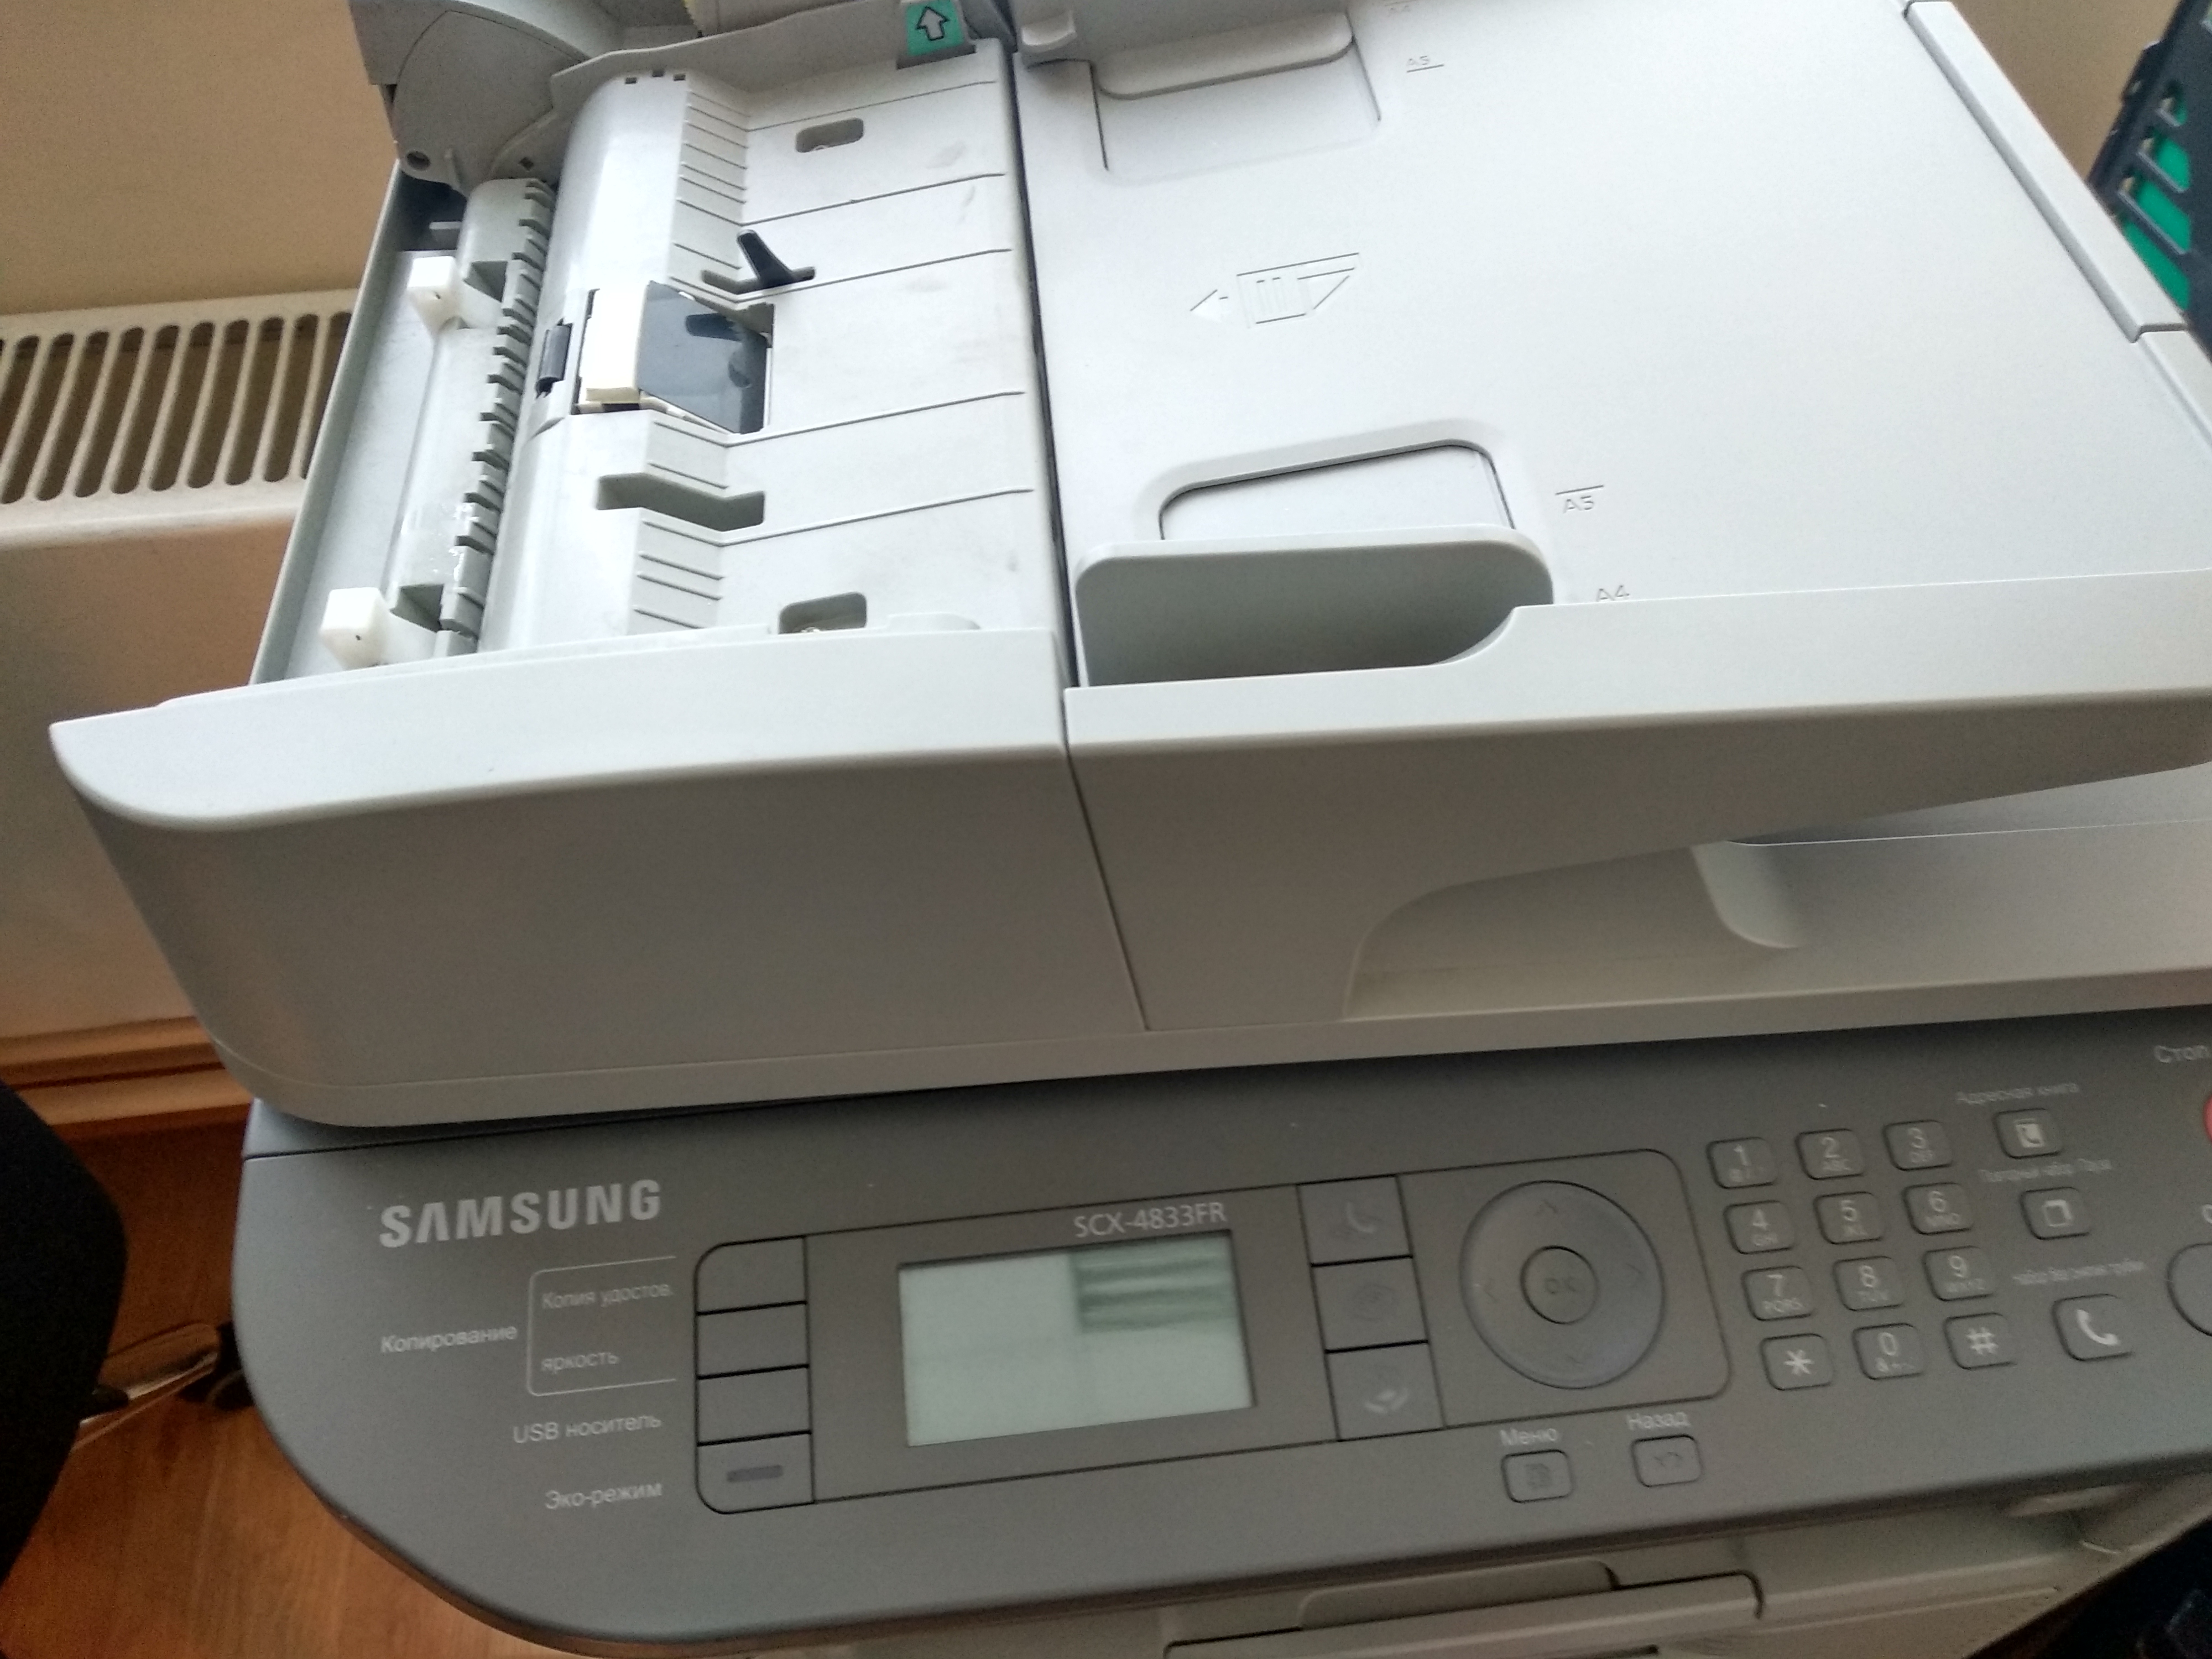 Принтер Samsung Scx 4833fr